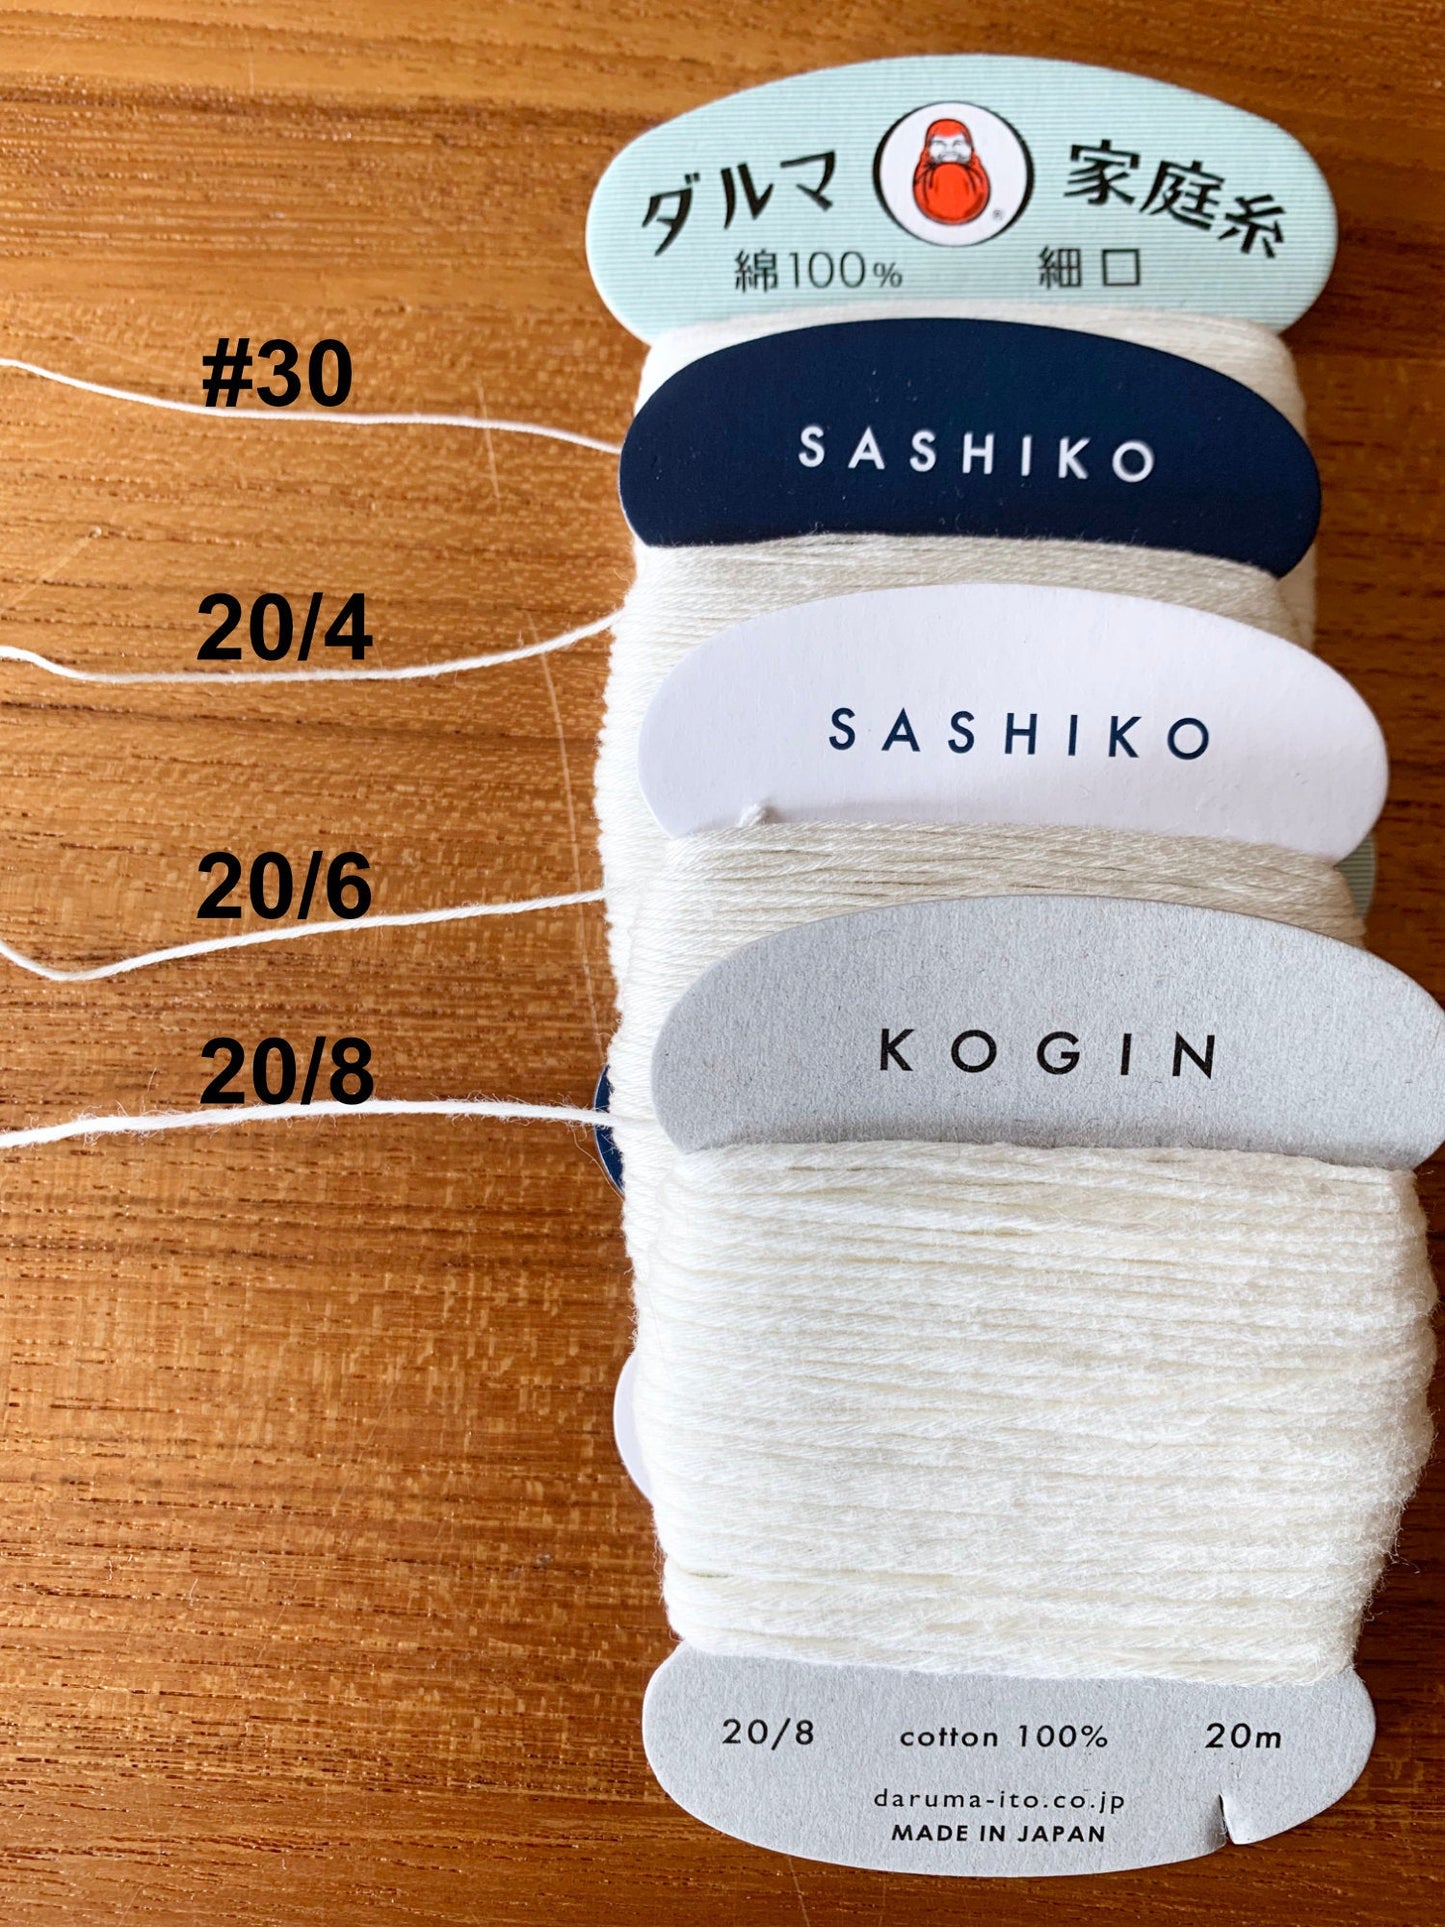 Daruma Home Thread Color #15 Mocha Brown Hand Sewing Thread Japanese Cotton 100 meter skein size #30